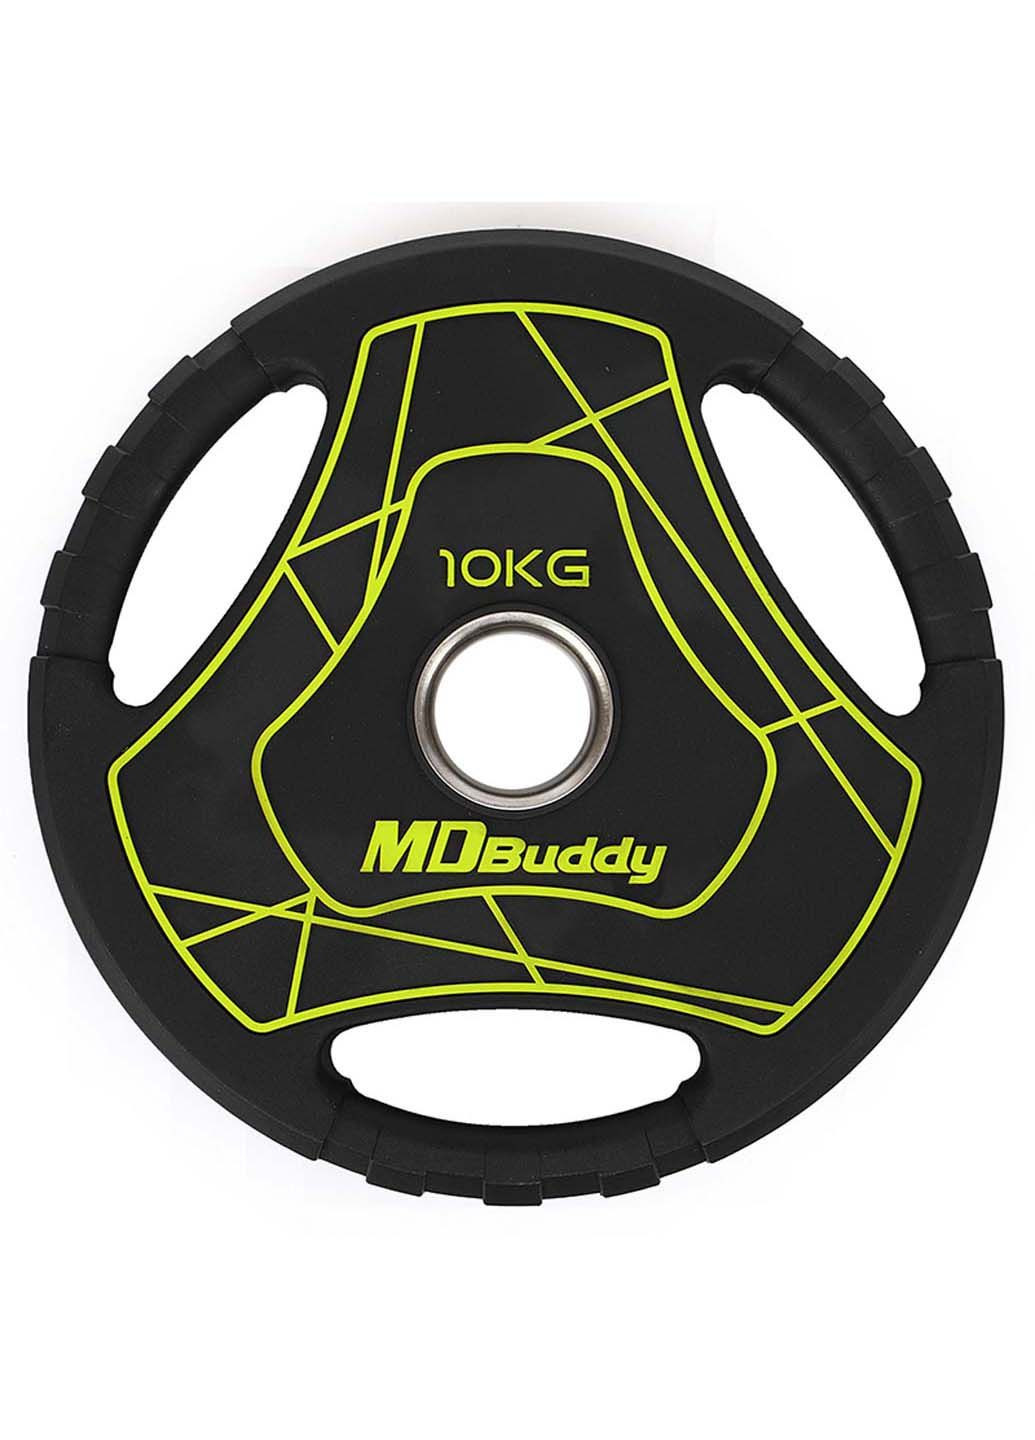 Блины диски TA-9647 10 кг MDbuddy (286043837)